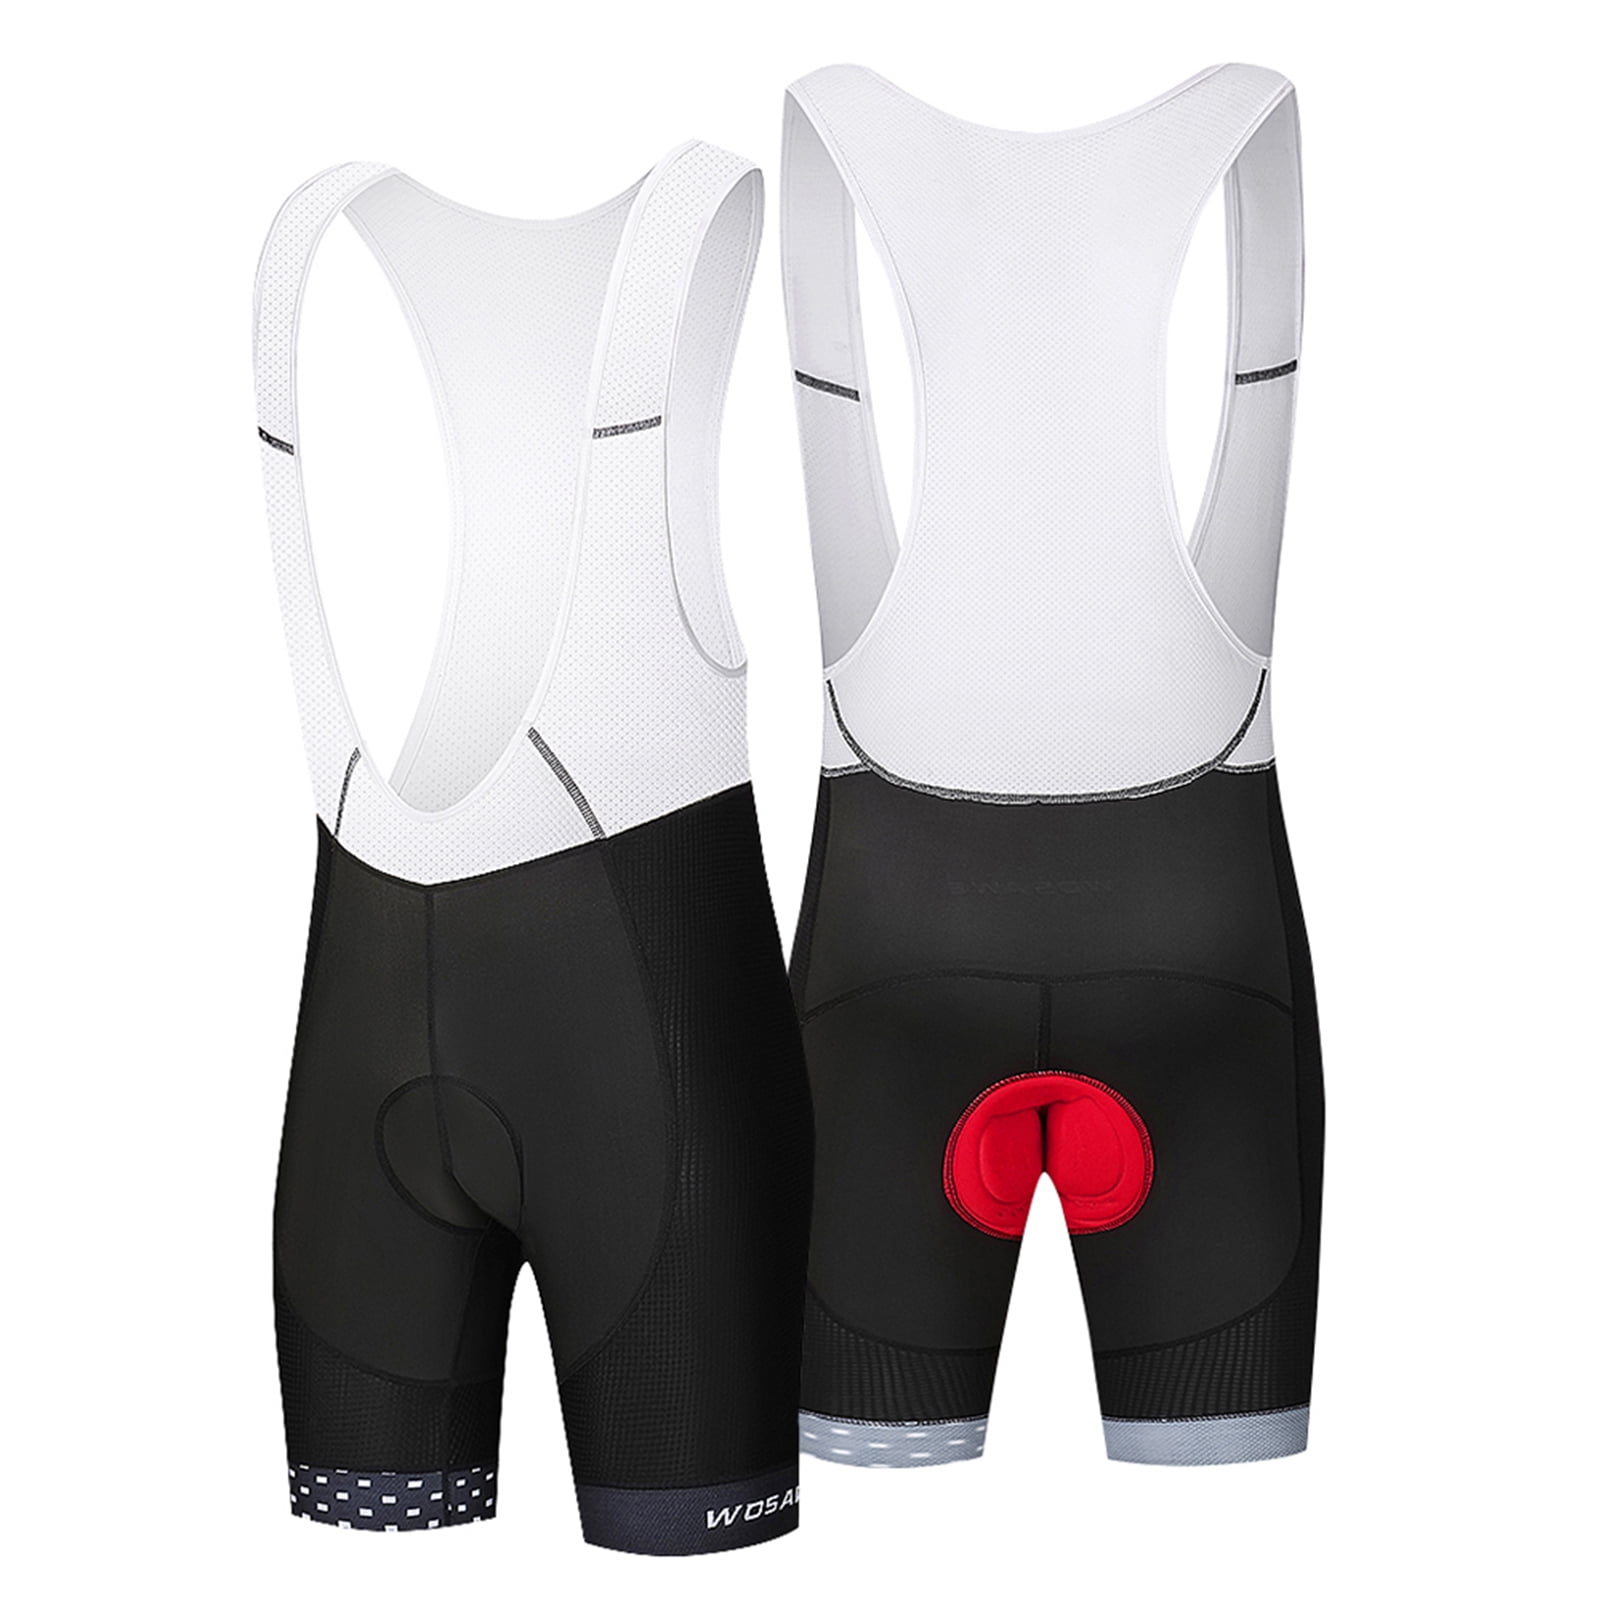 Men's Cycling Bib Shorts Bottoms Clothing Bike Riding Brace Pants Cushion S~3XL 